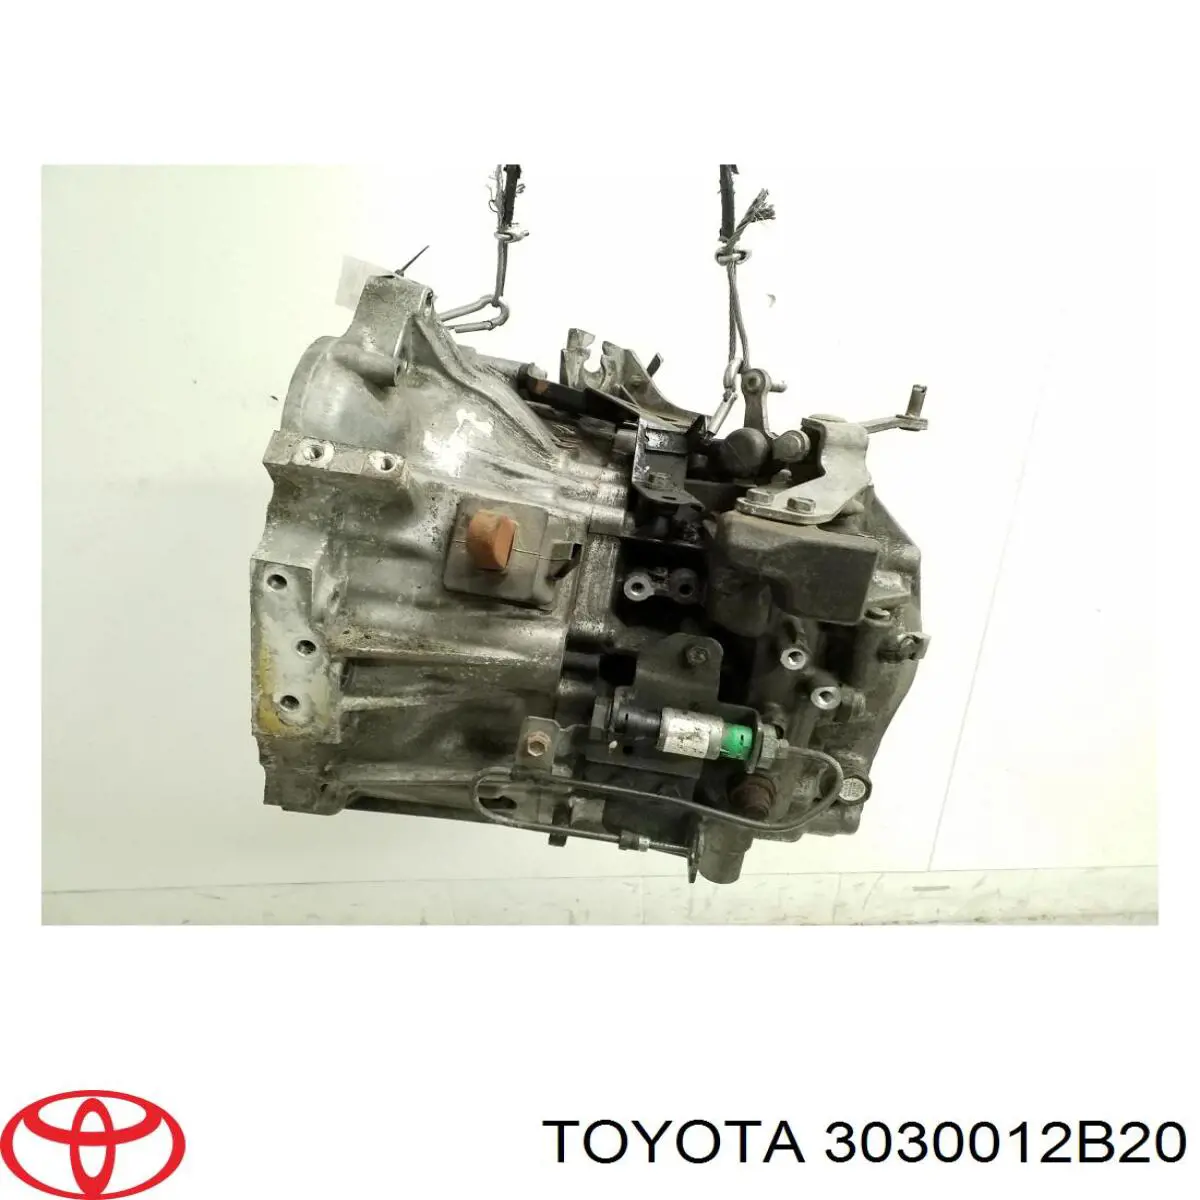 Caja de cambios mecánica, completa Toyota 3030012B20